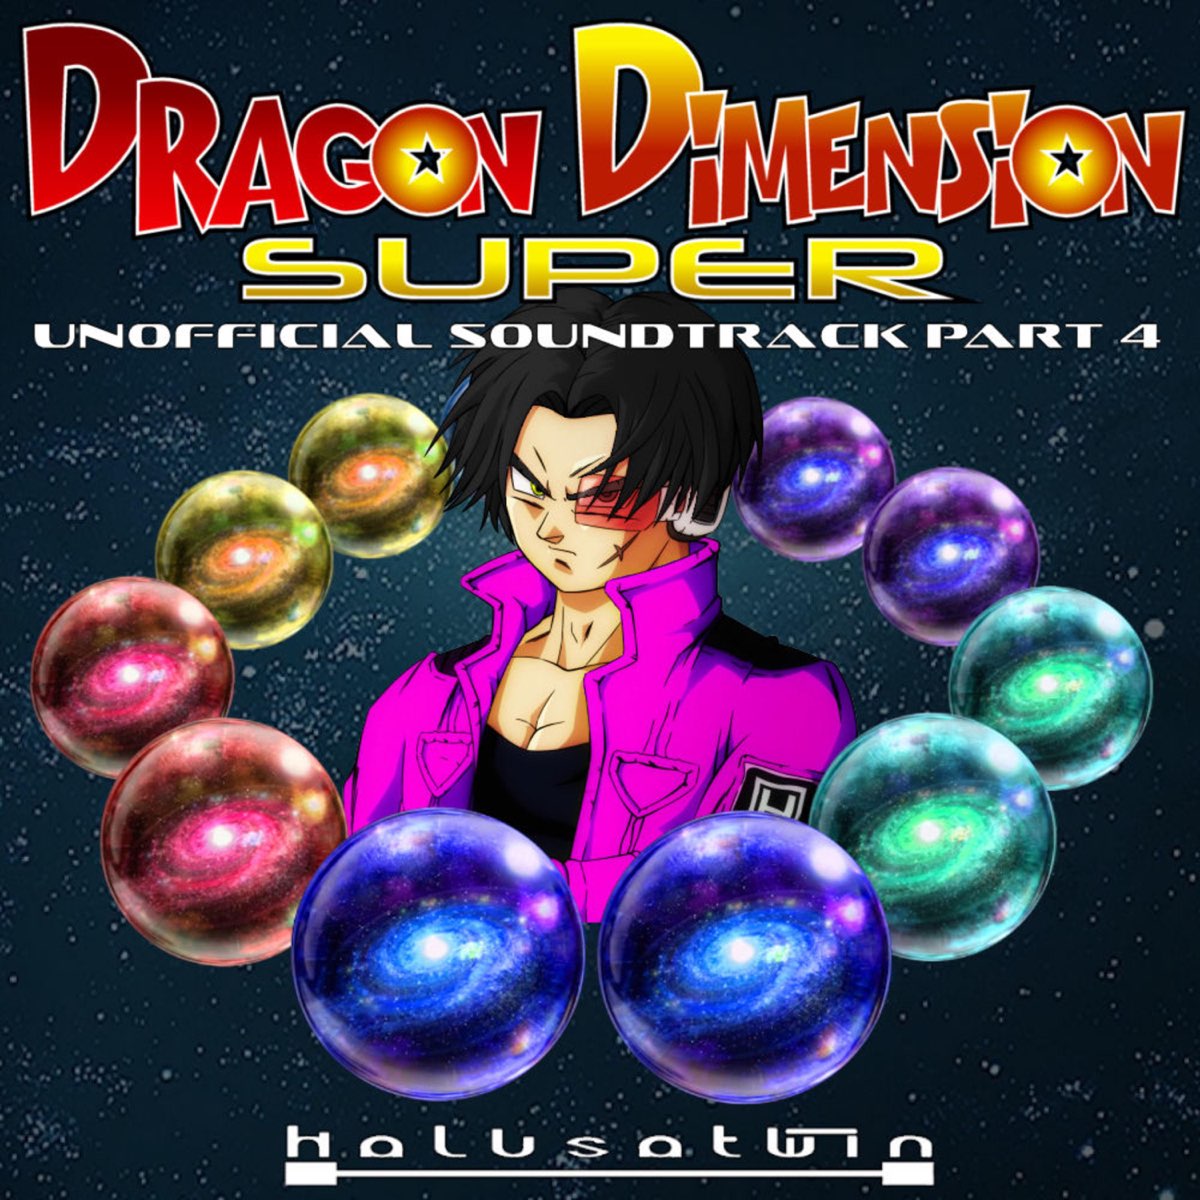 Dragon Ball Super - Ultimate Battle (Português PT BR) - feat